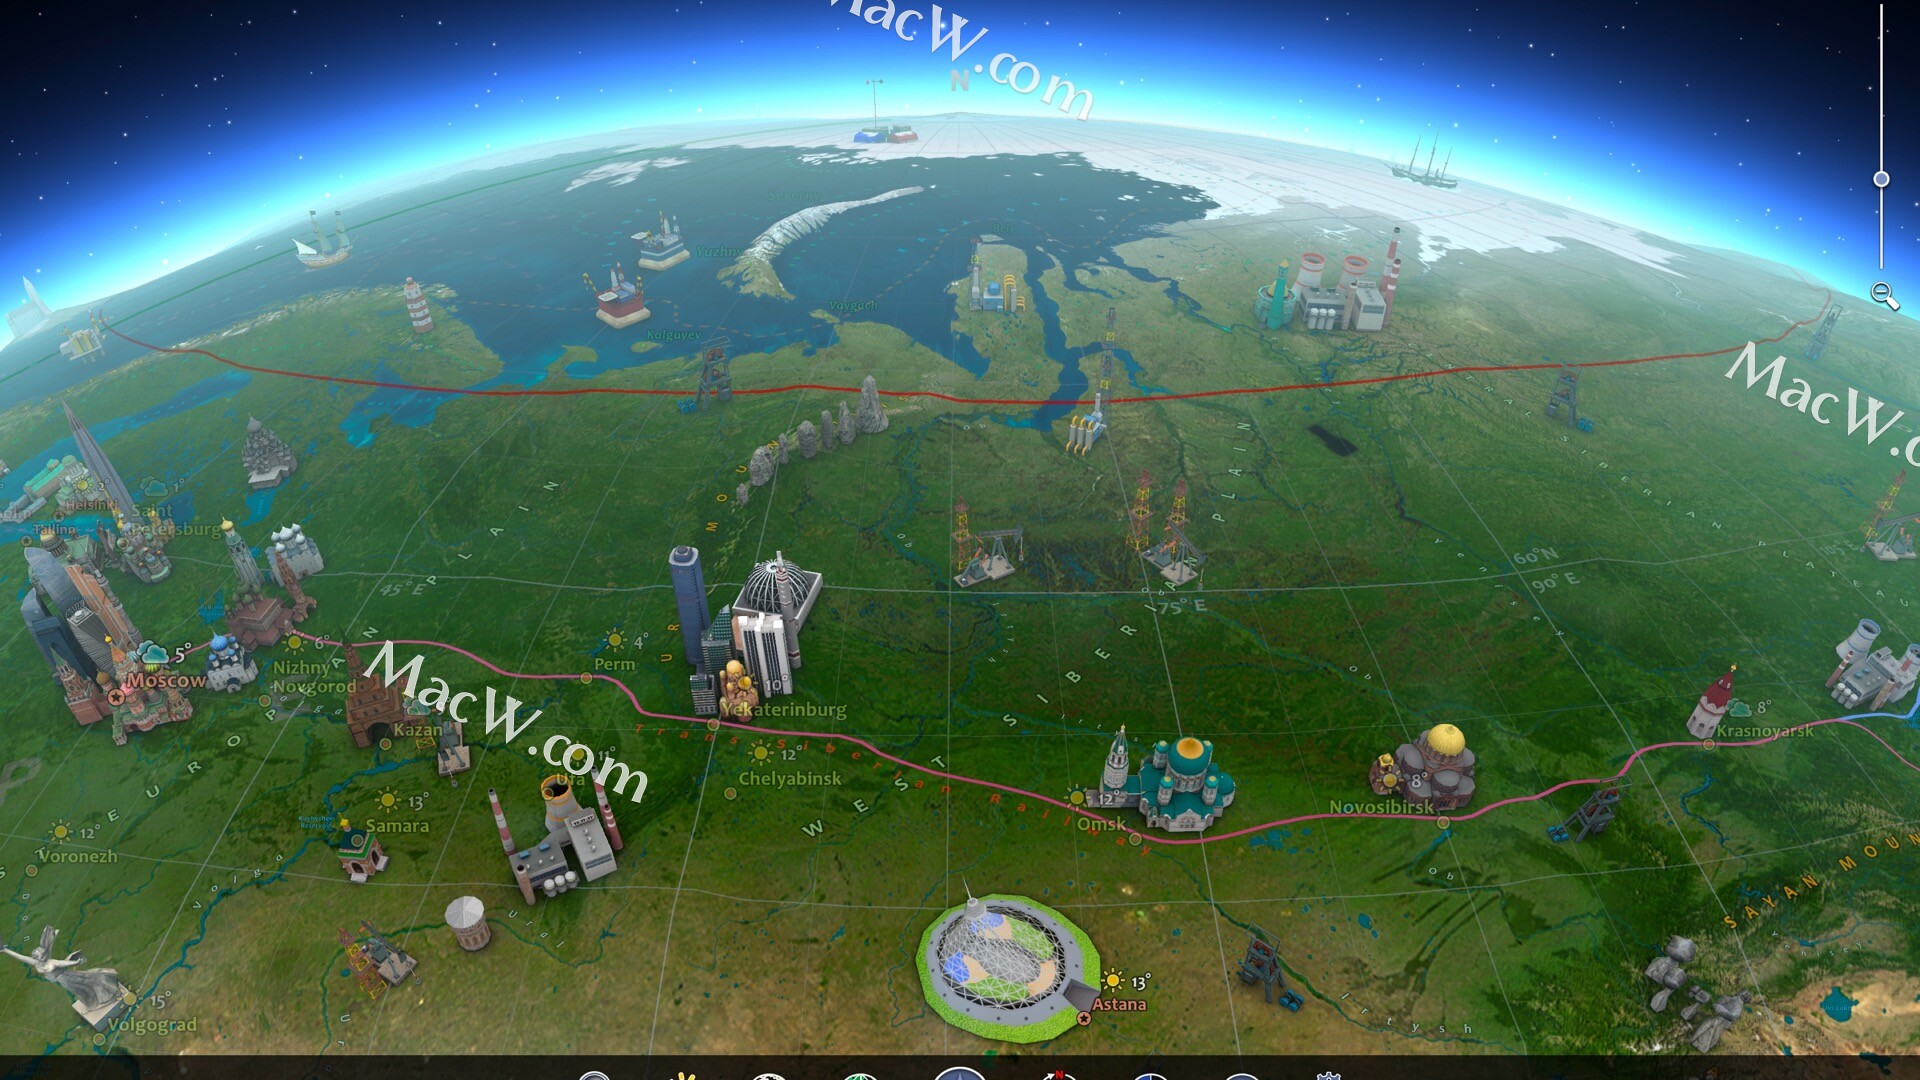 3D地球模拟软件-Earth 3D for mac